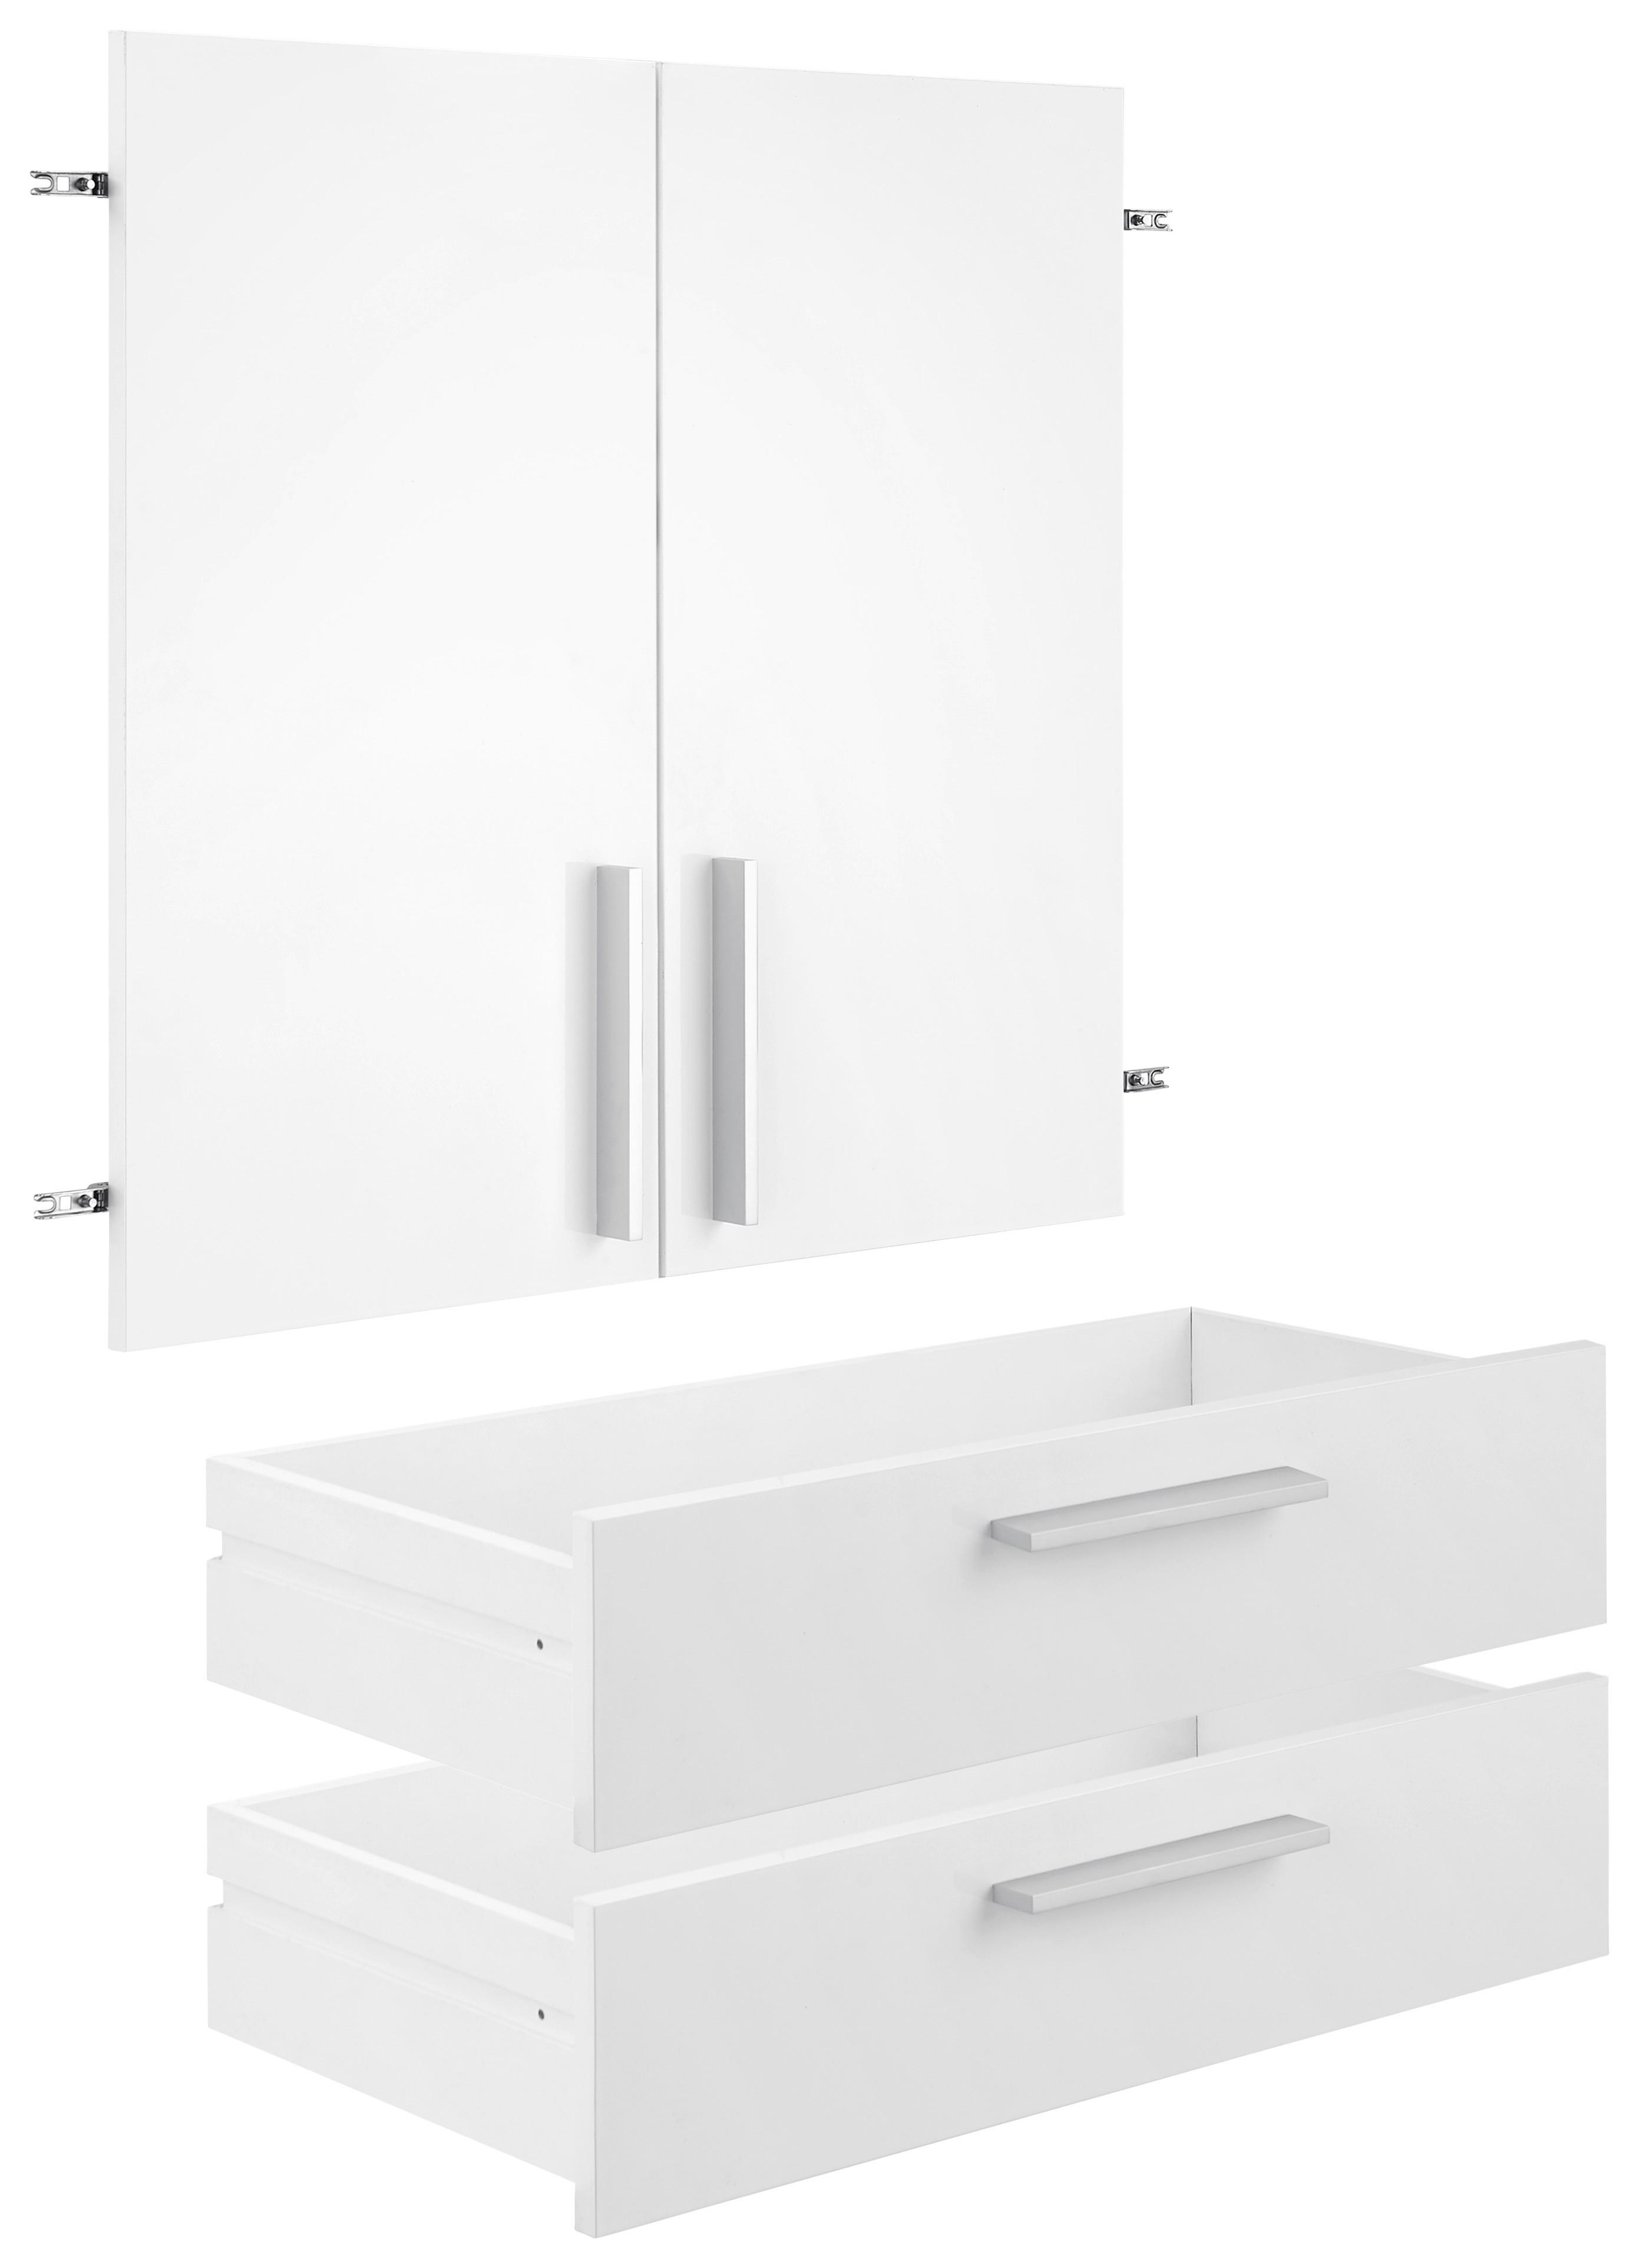 Türenset in Weiß, 4er Set - MODERN, Holzwerkstoff (72/103/2cm) - Modern Living